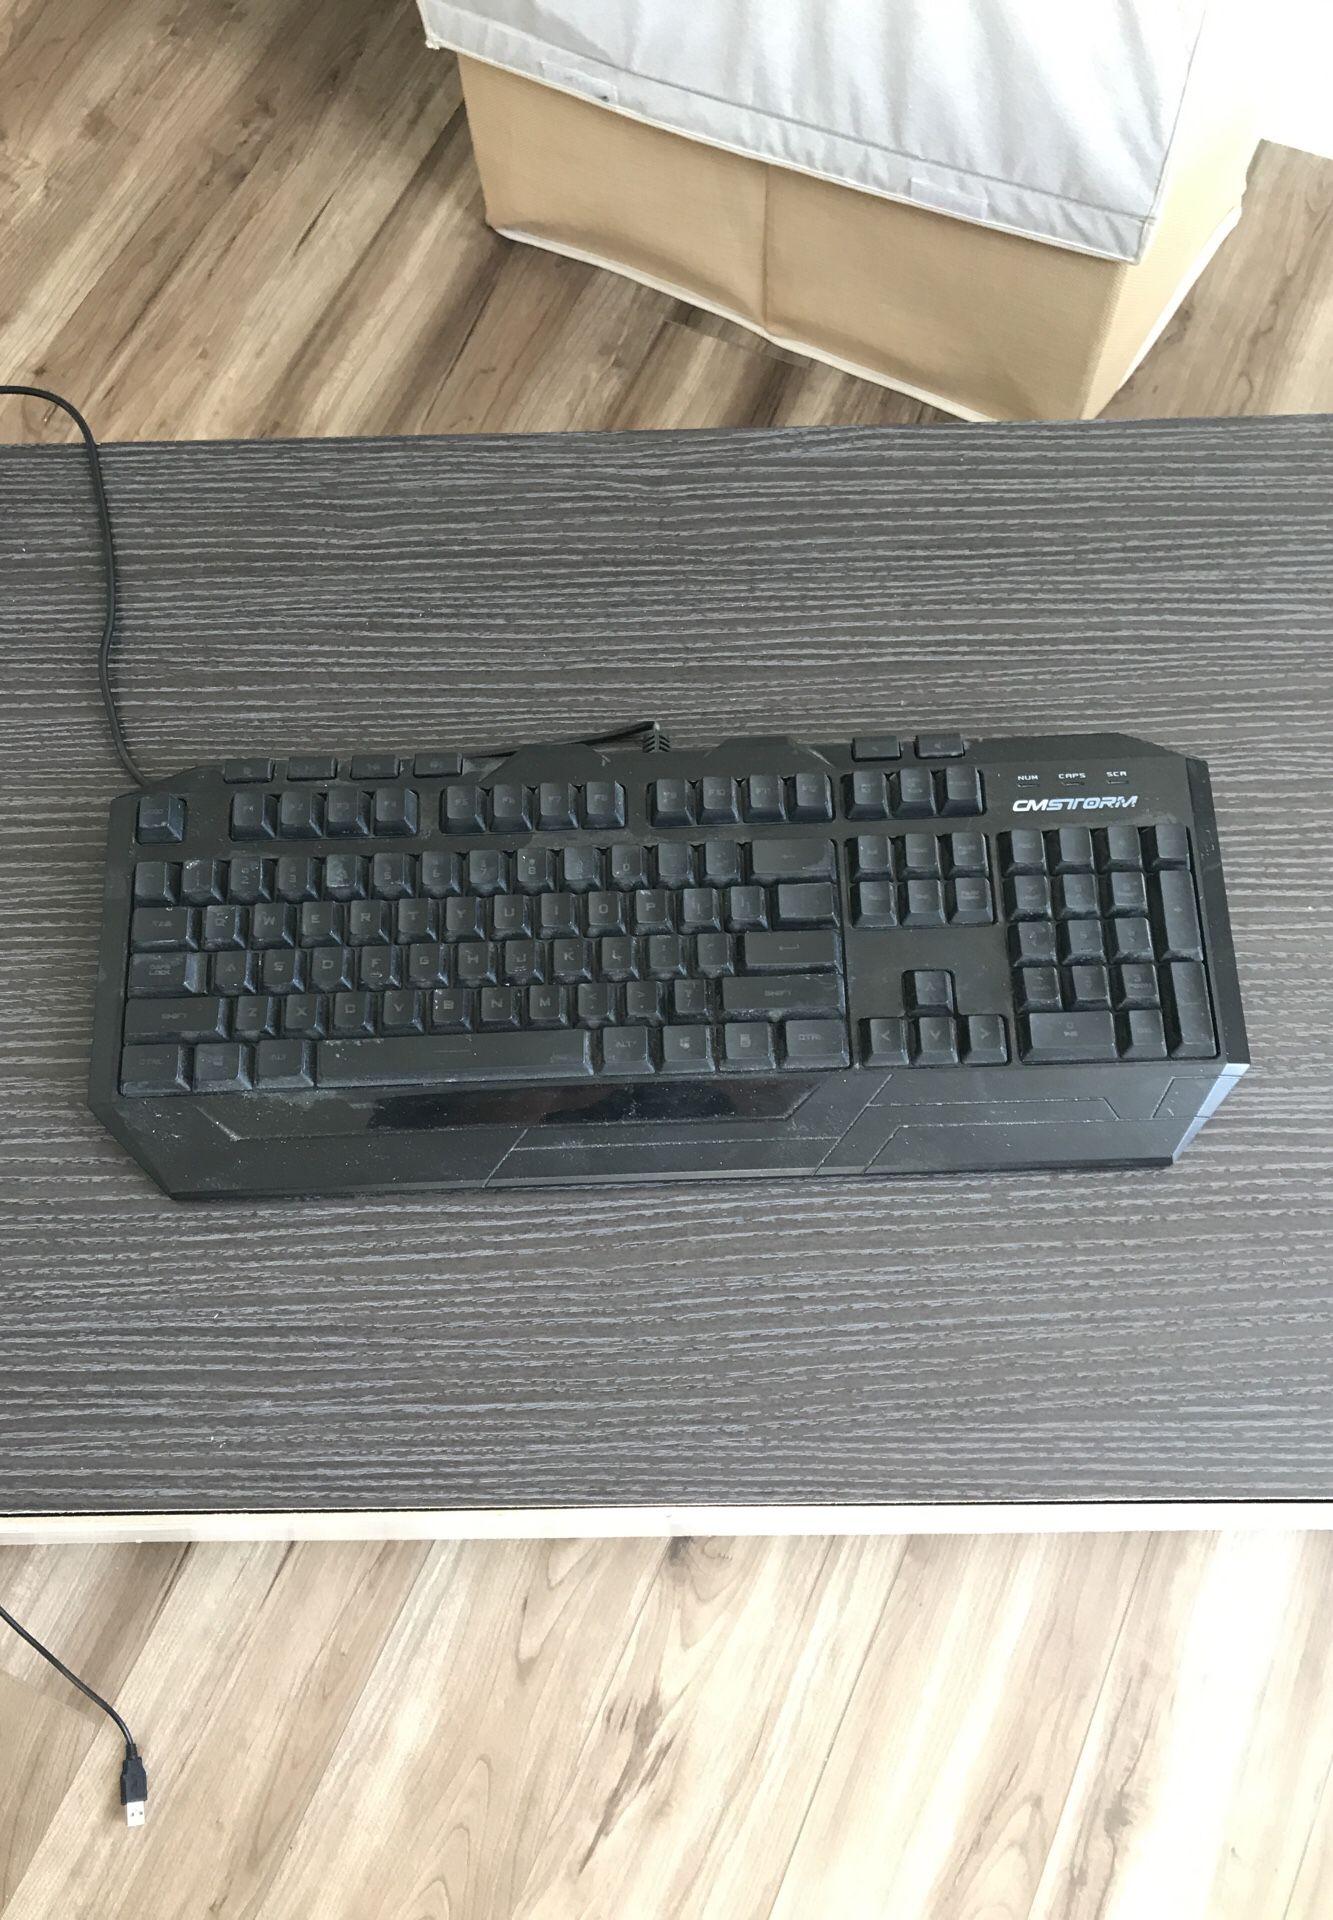 Gaming computer keyboard